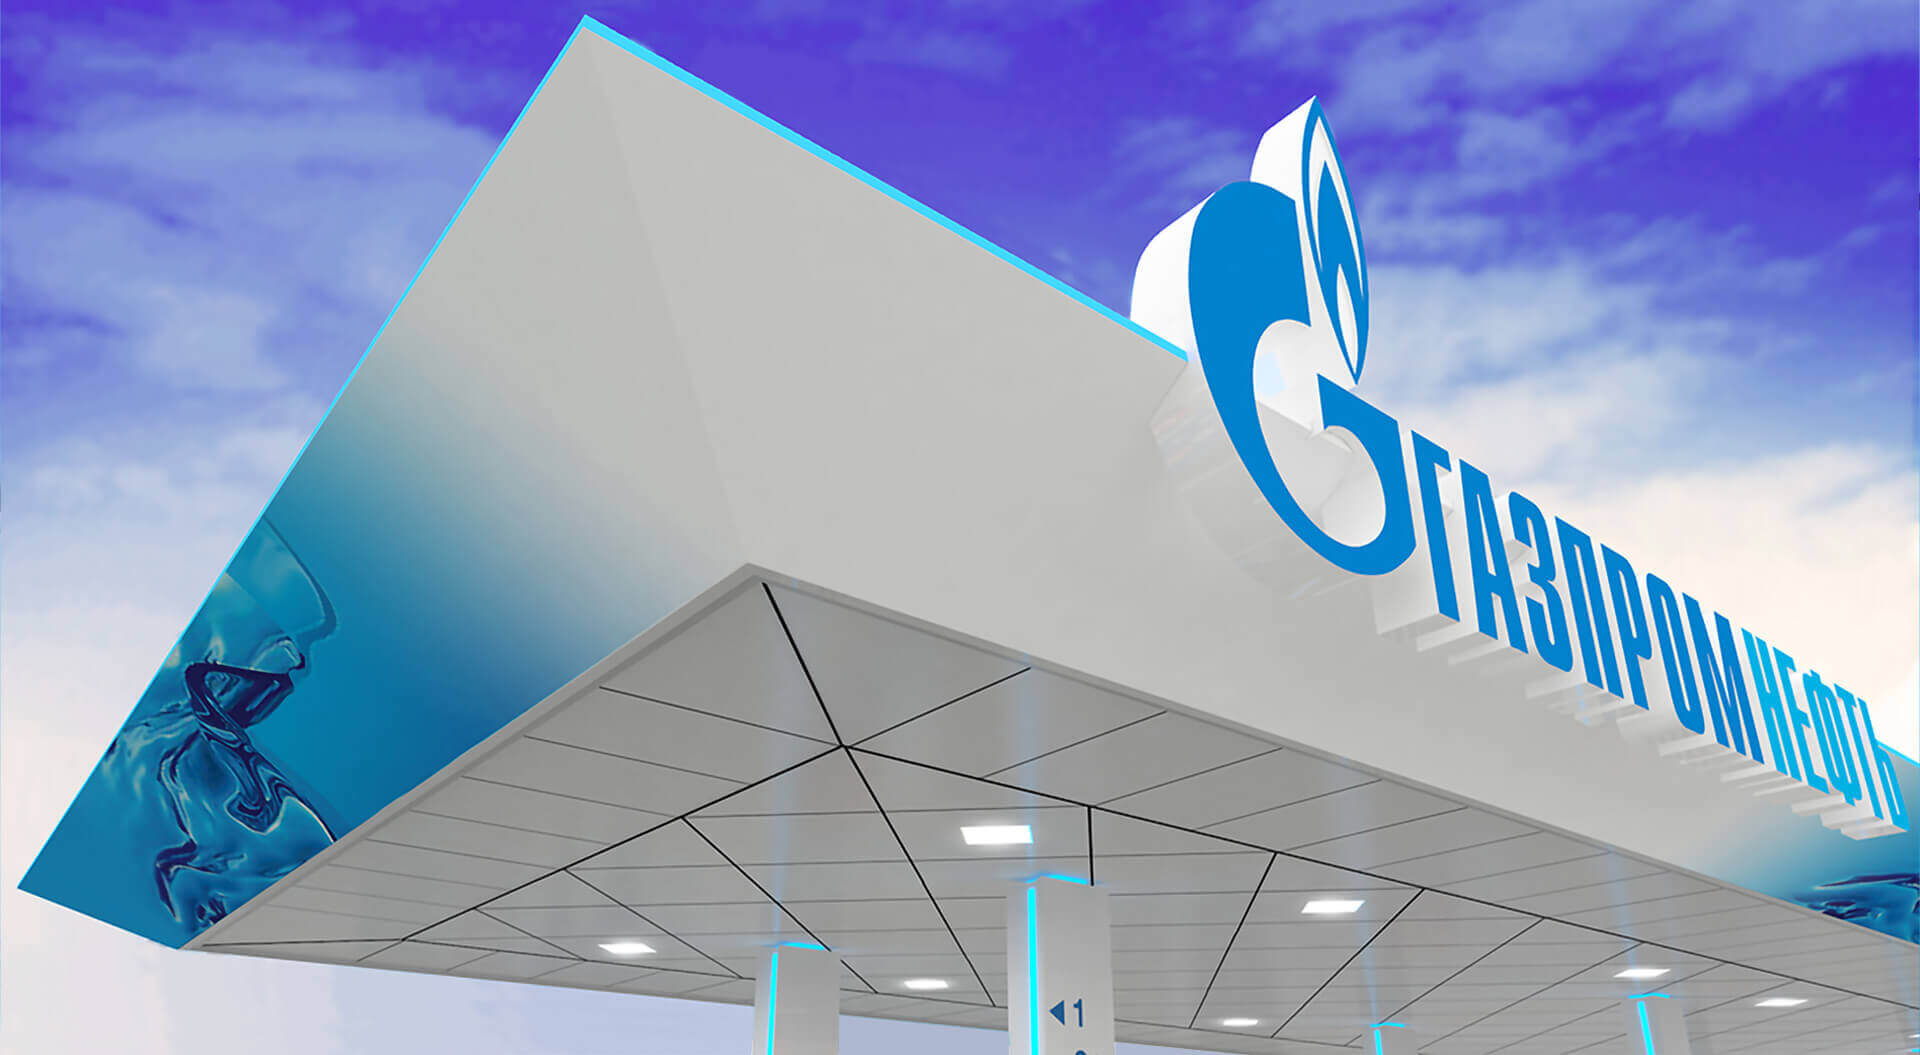 Gazprom Neft Russia petrol forecourt station Retail interior store design and branding